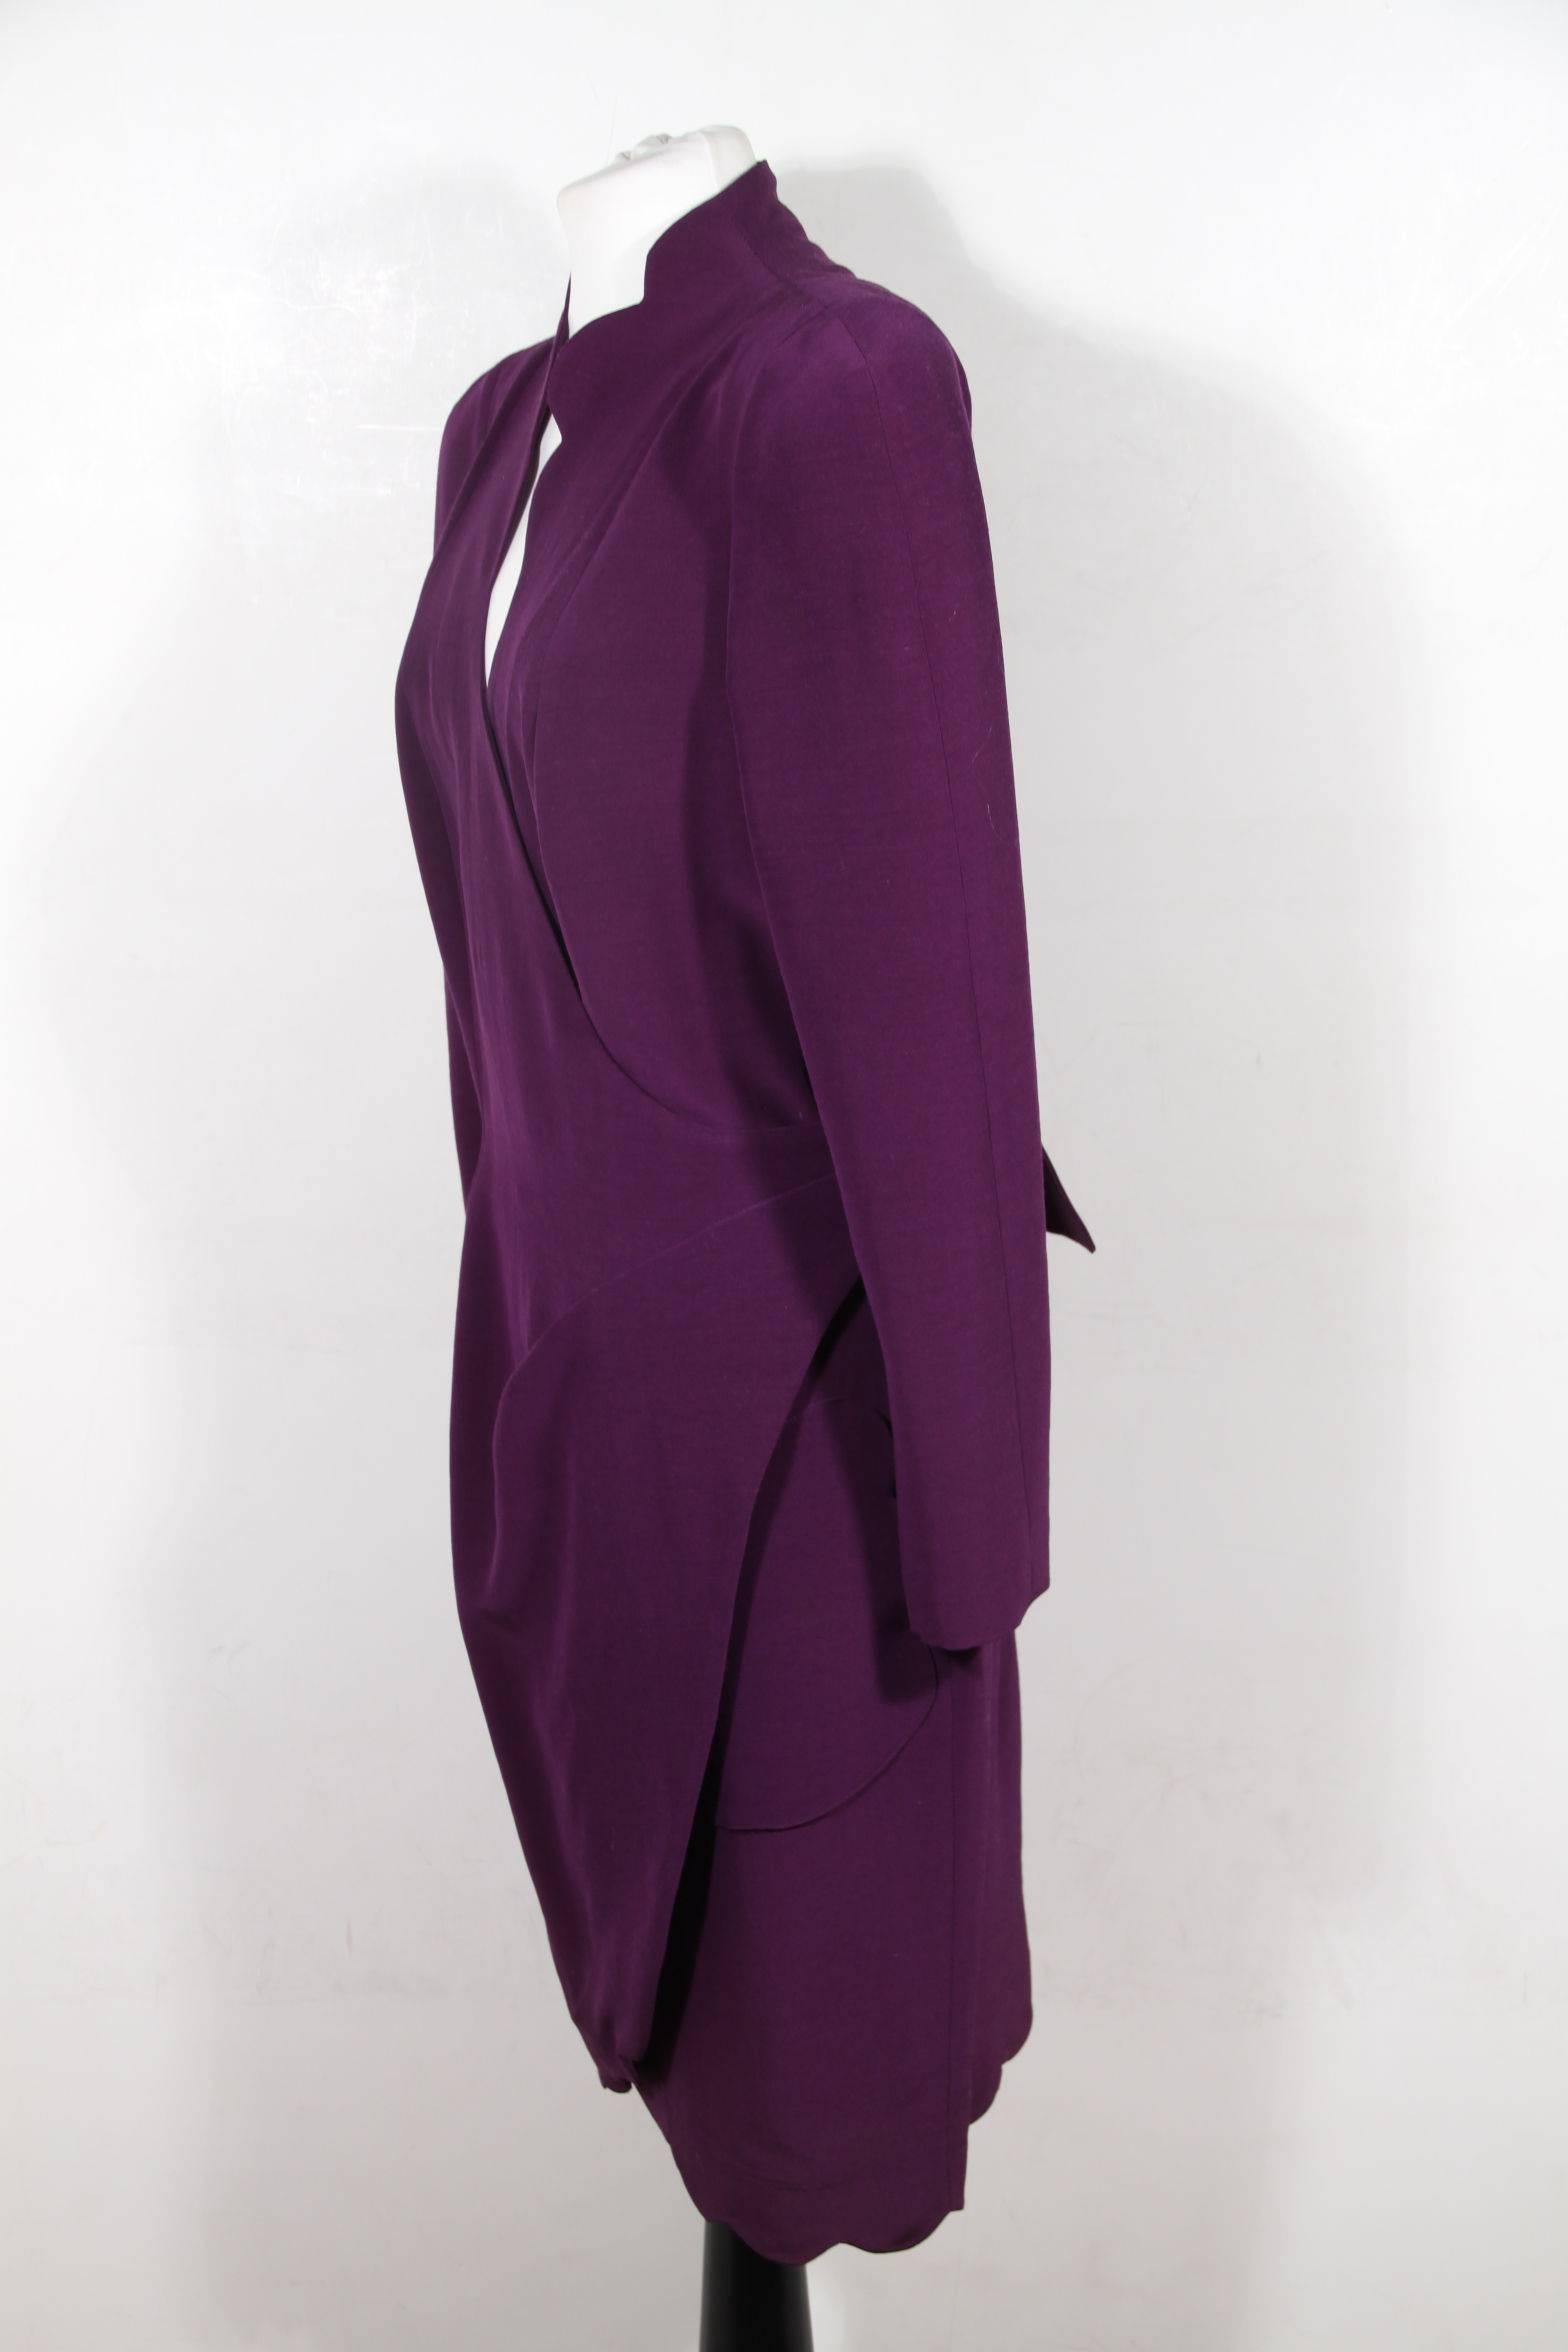 Black THIERRY MUGLER ACTIVE VINTAGE Purple Wool Blend WRAP DRESS Sz 44